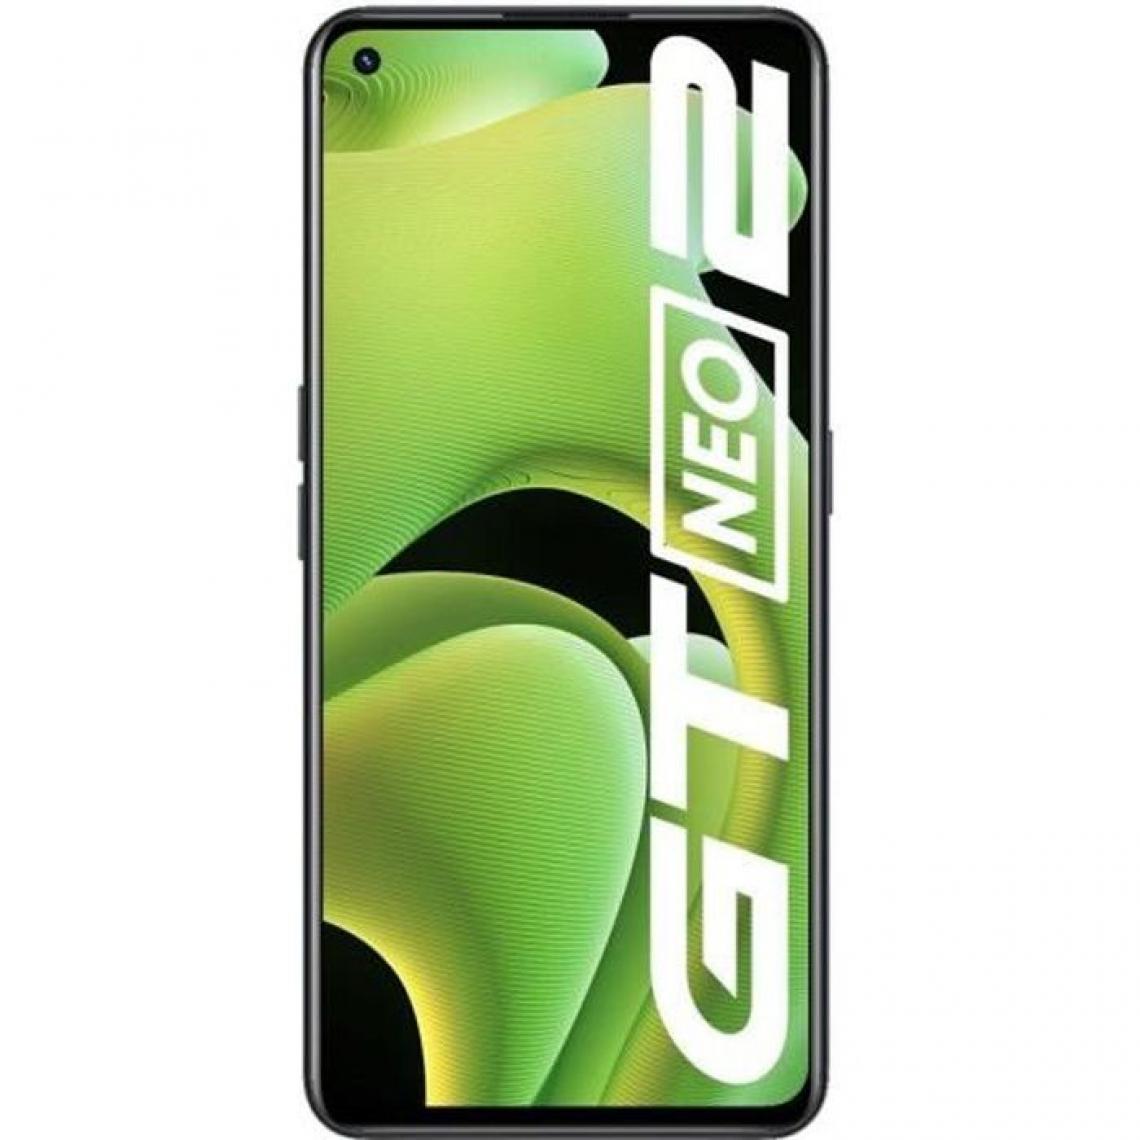 Realme - REALME GT NEO 2 256Go Vert - Smartphone Android